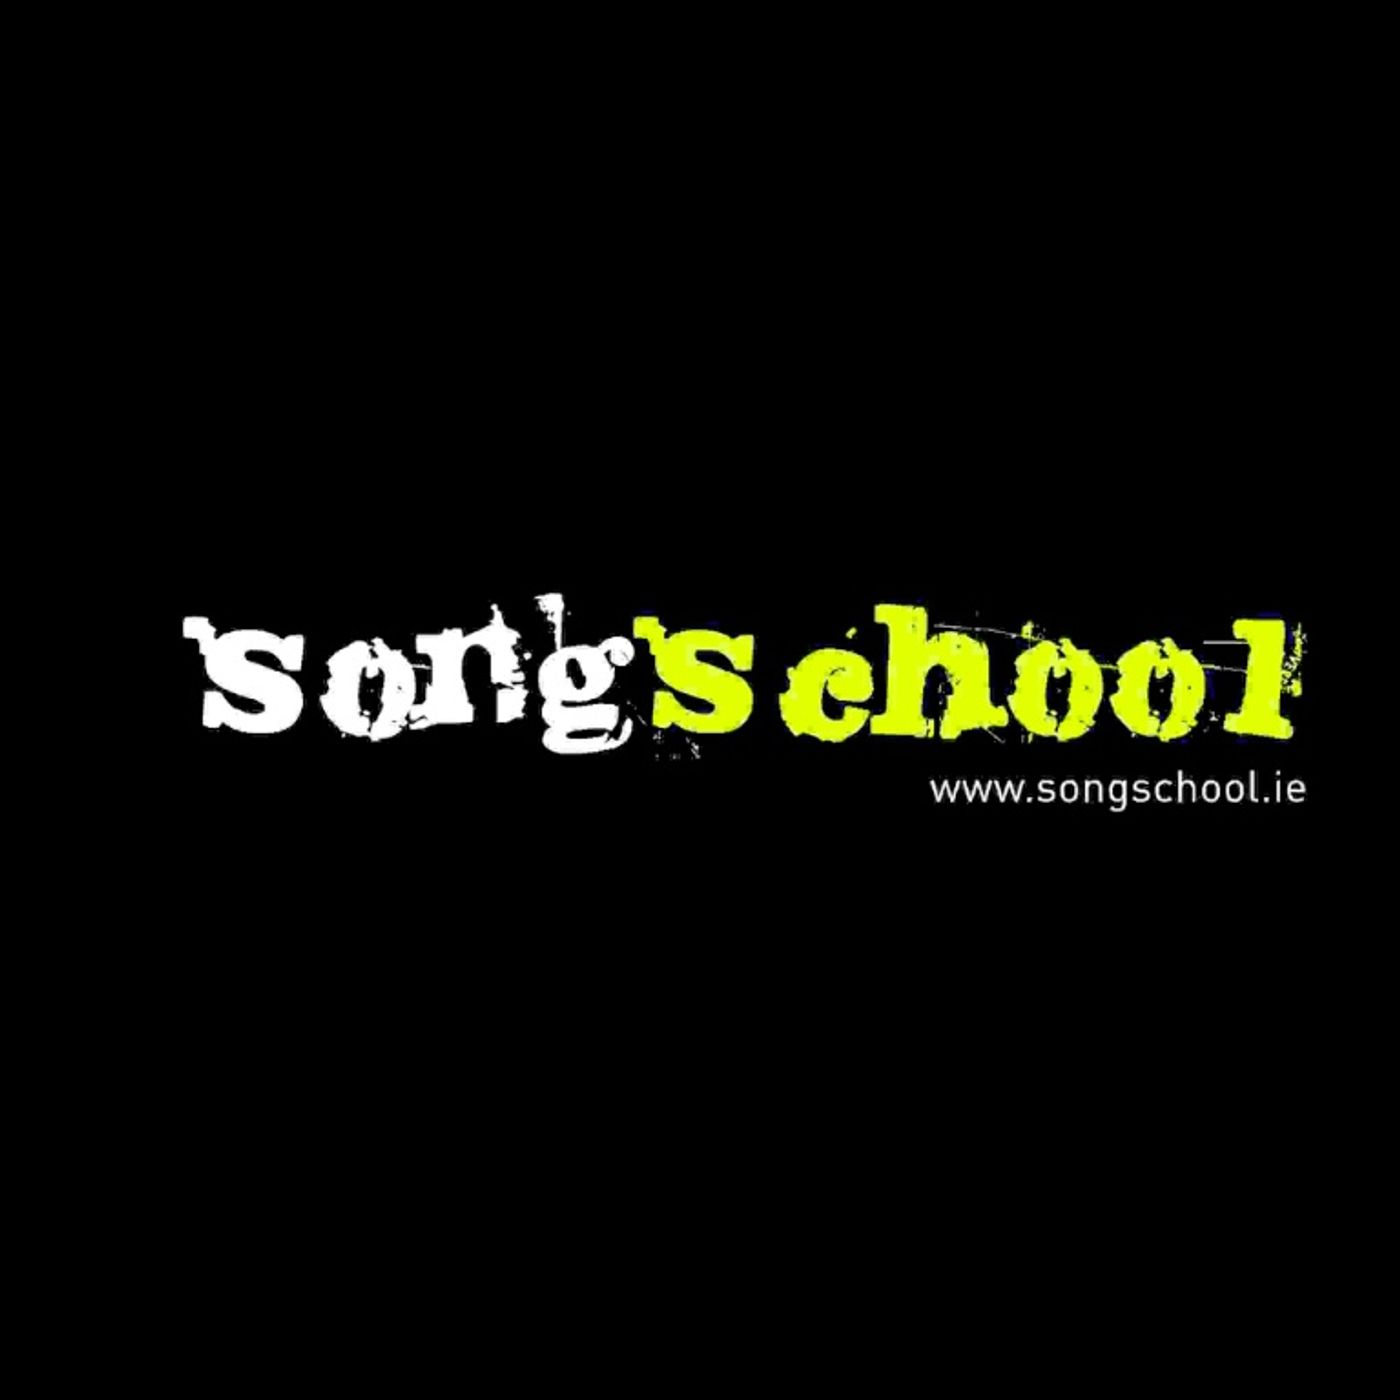 The Junior Songschool Show @ NCH